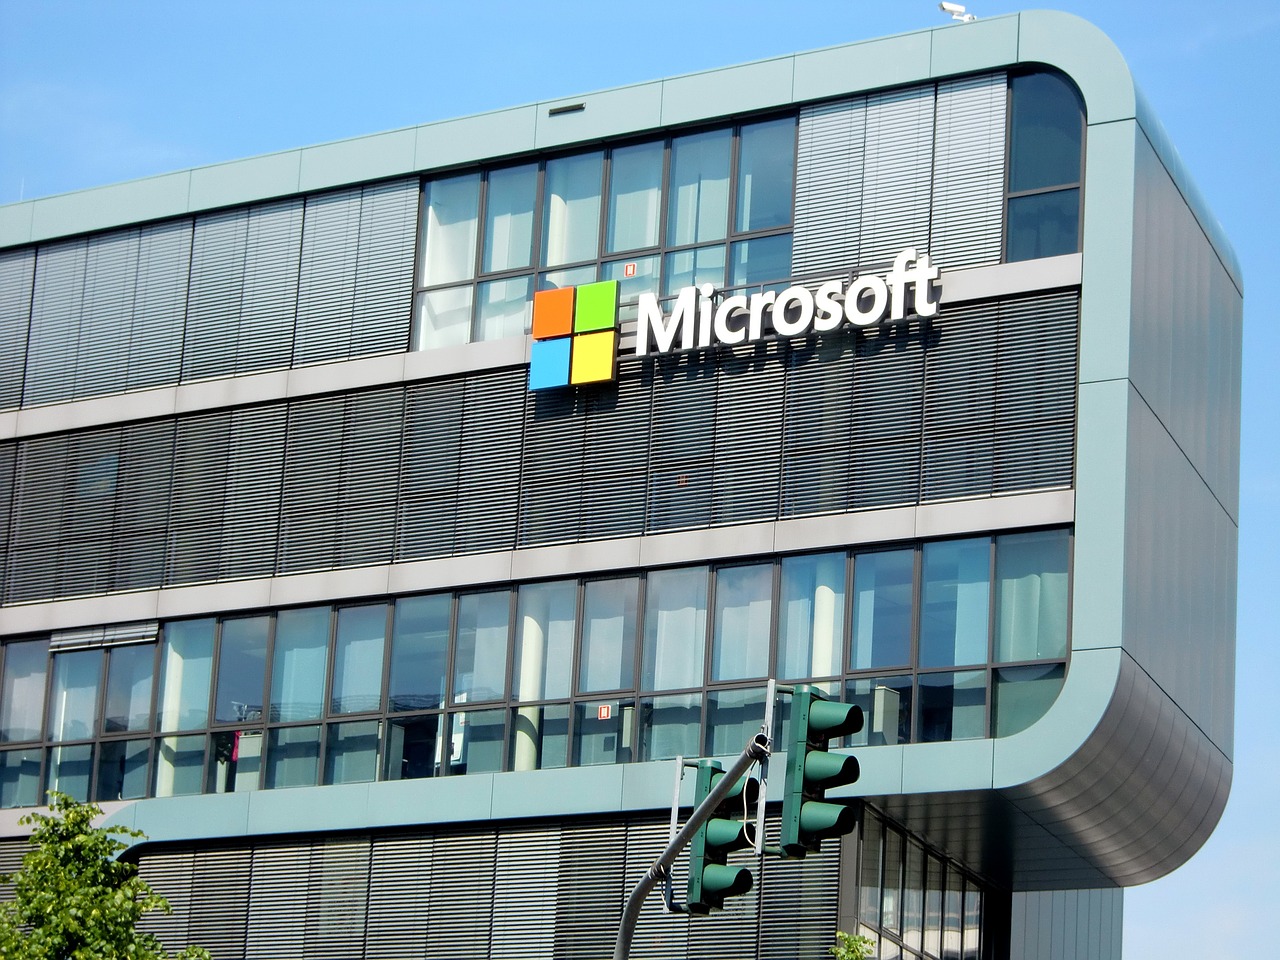 Esfuerzos de Microsoft y Salesforce en COP27 2 بالتزامن مع cop27 ,بالشراكة مع "التنمية الافريقي" "مايكروسفت" تقيم مختبرات للبيانات المناخية في القاهرة ونيروبي